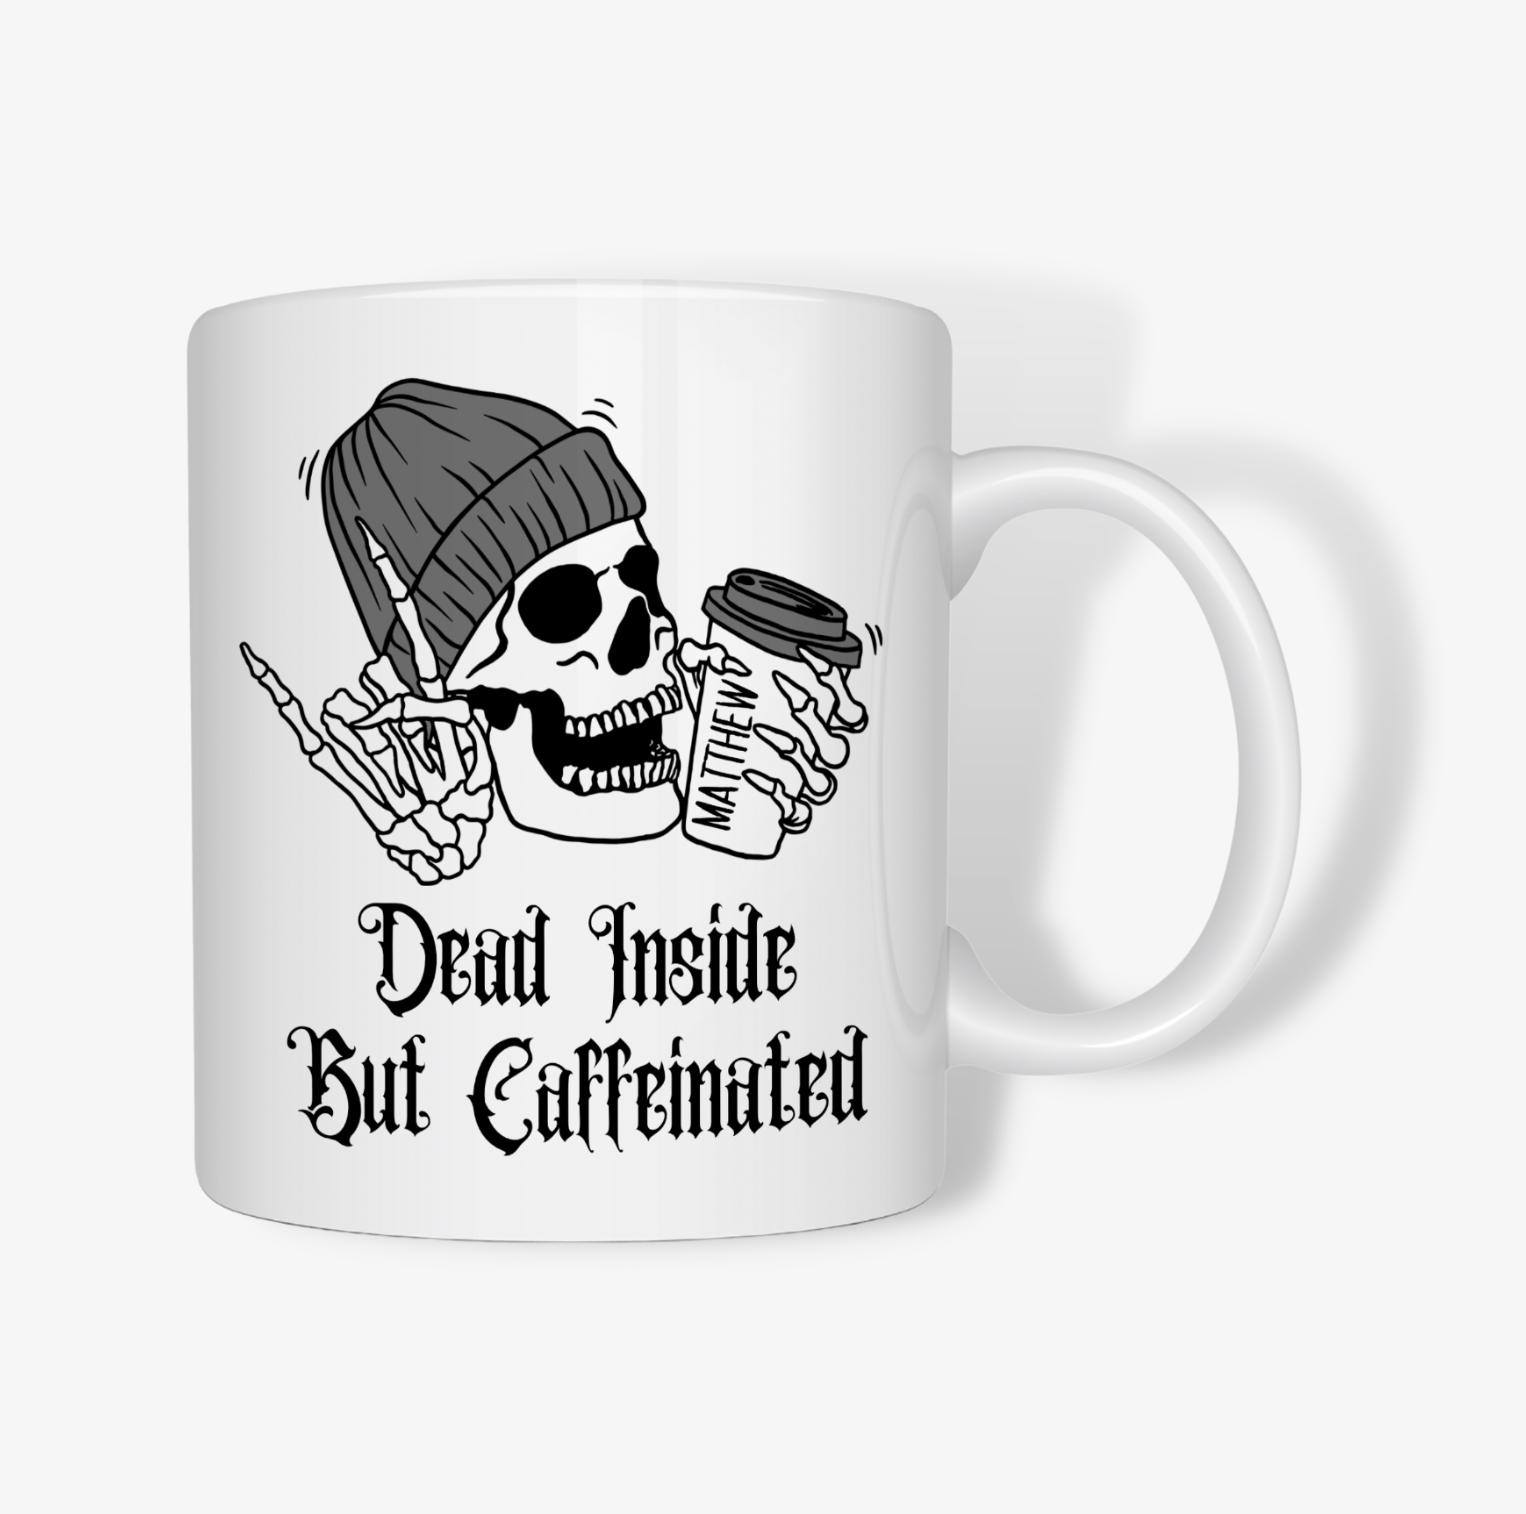 Personalised Halloween Dead Inside But Caffeinated Mug